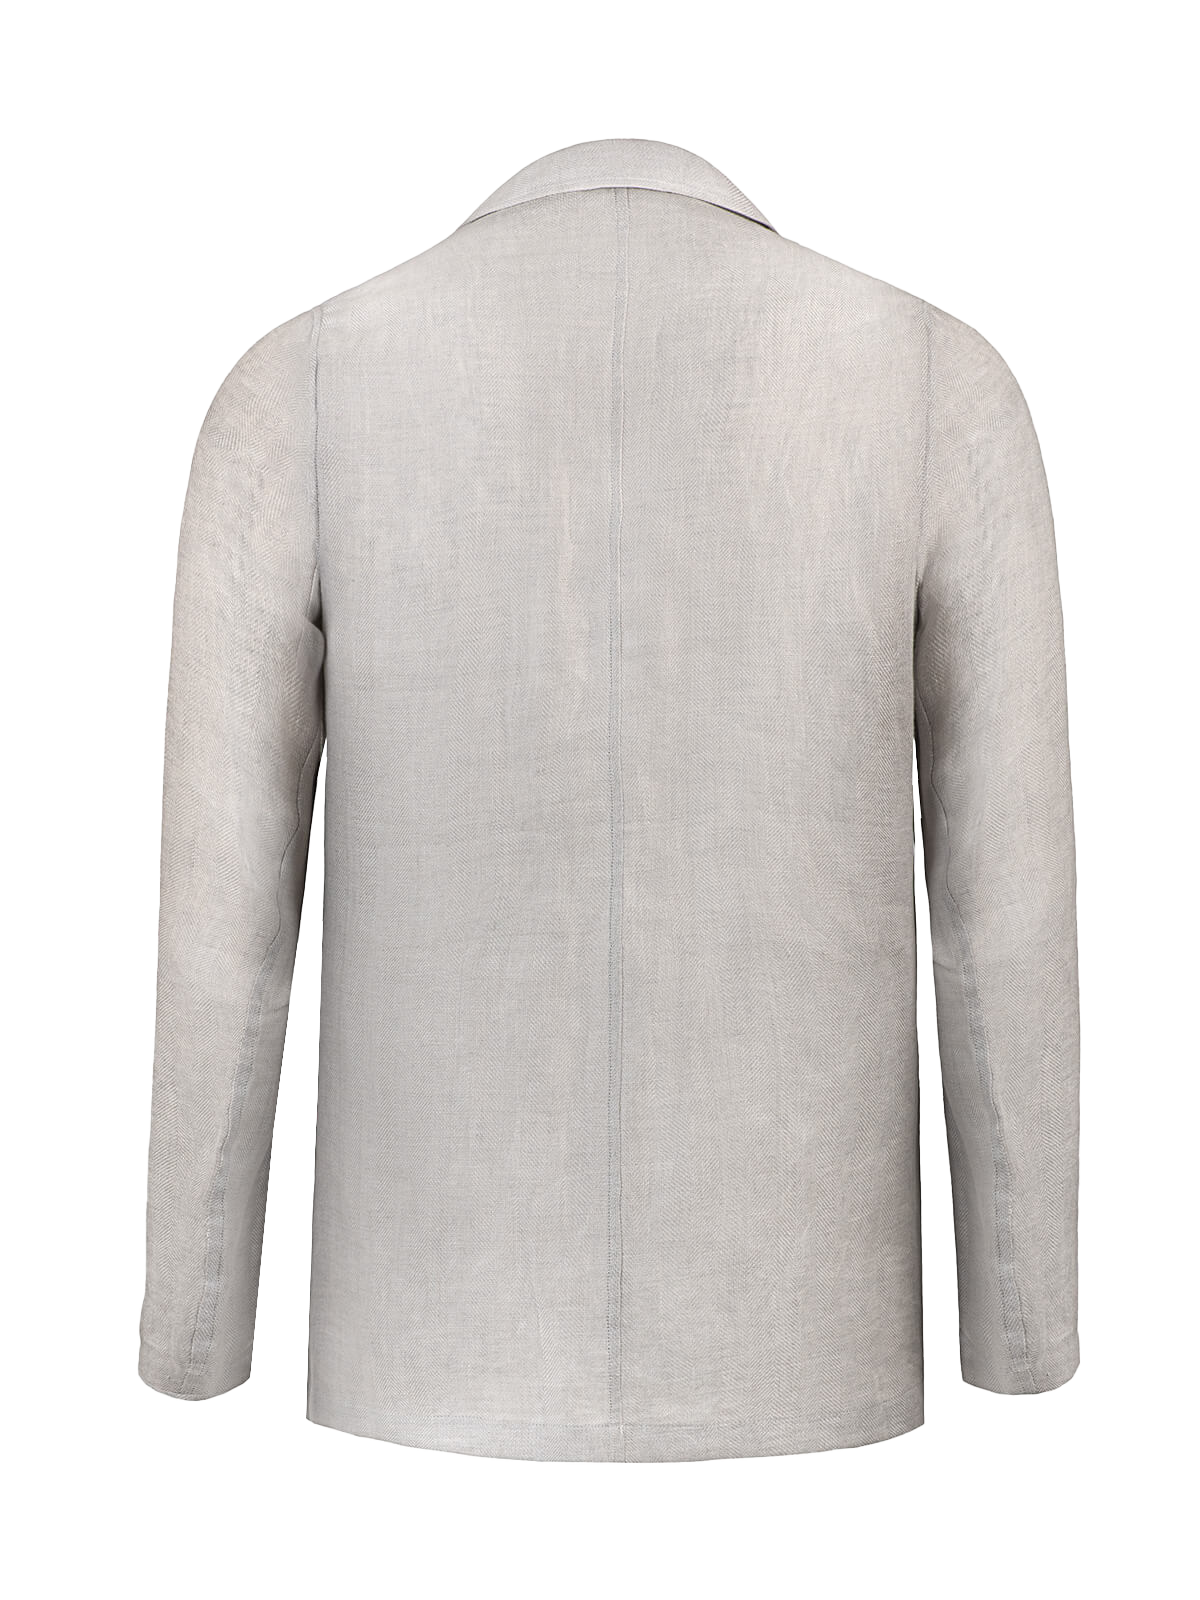 Giacca Sud Man 100% Capri light grey linen jacket back